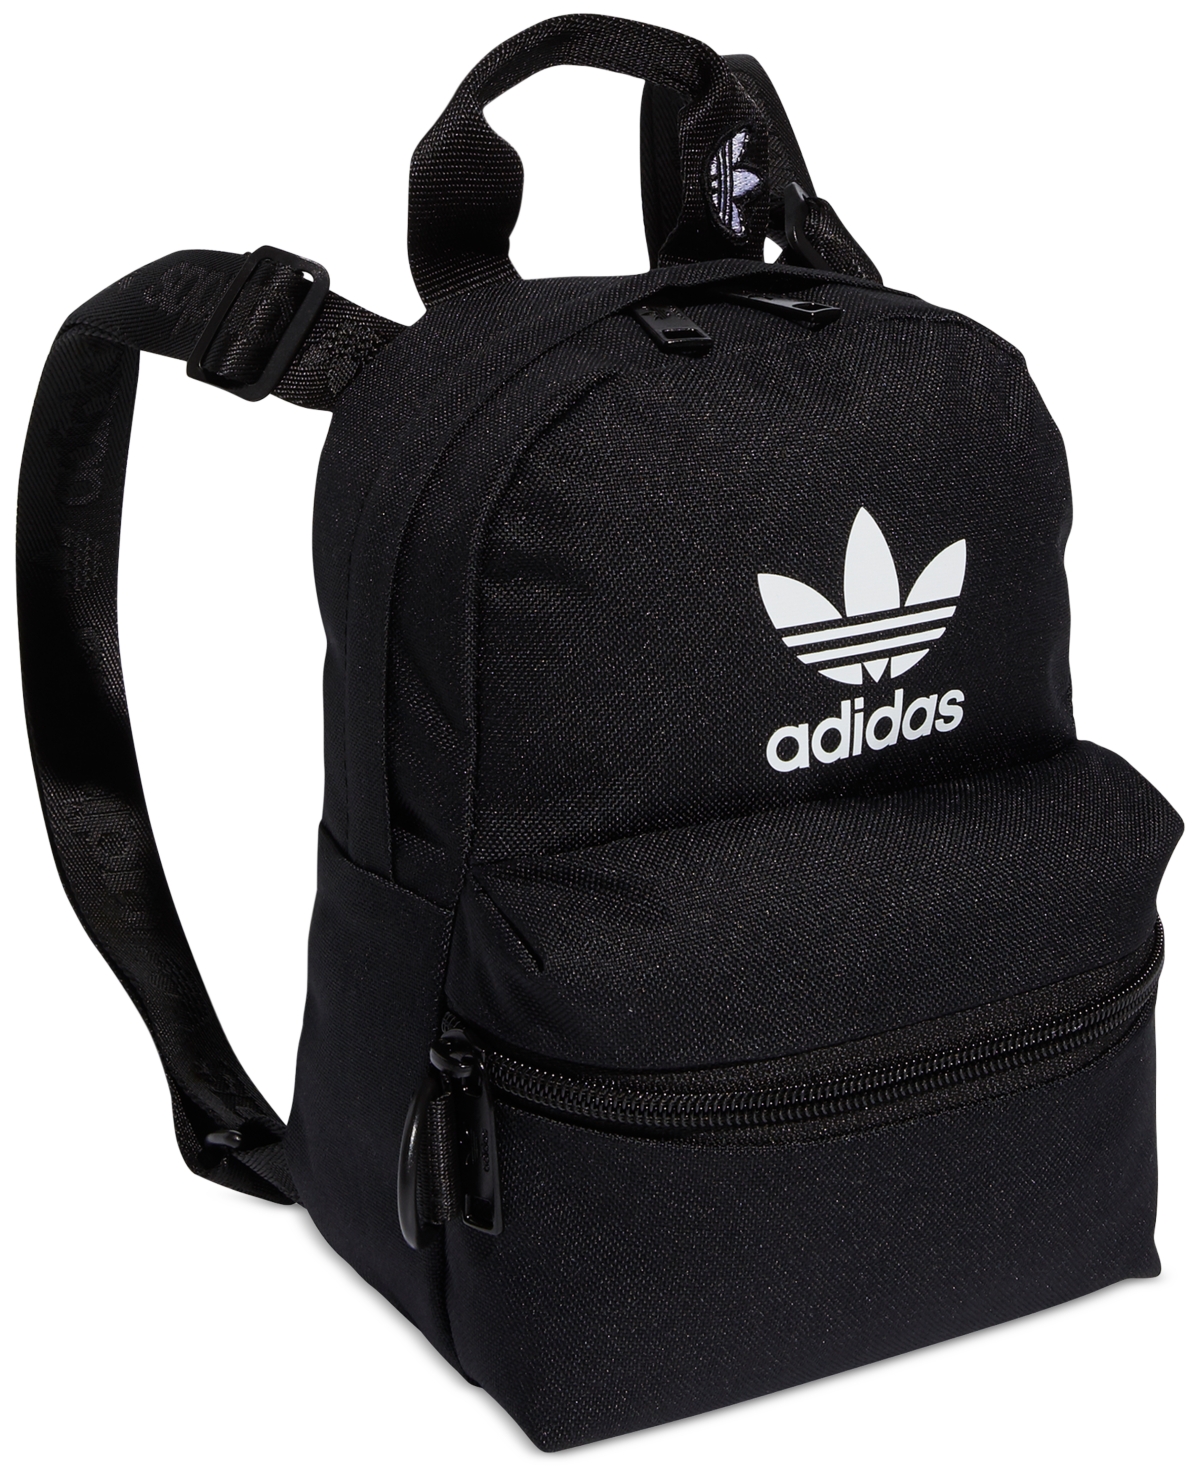 adidas Originals Women's Trefoil 2 Mini Backpack